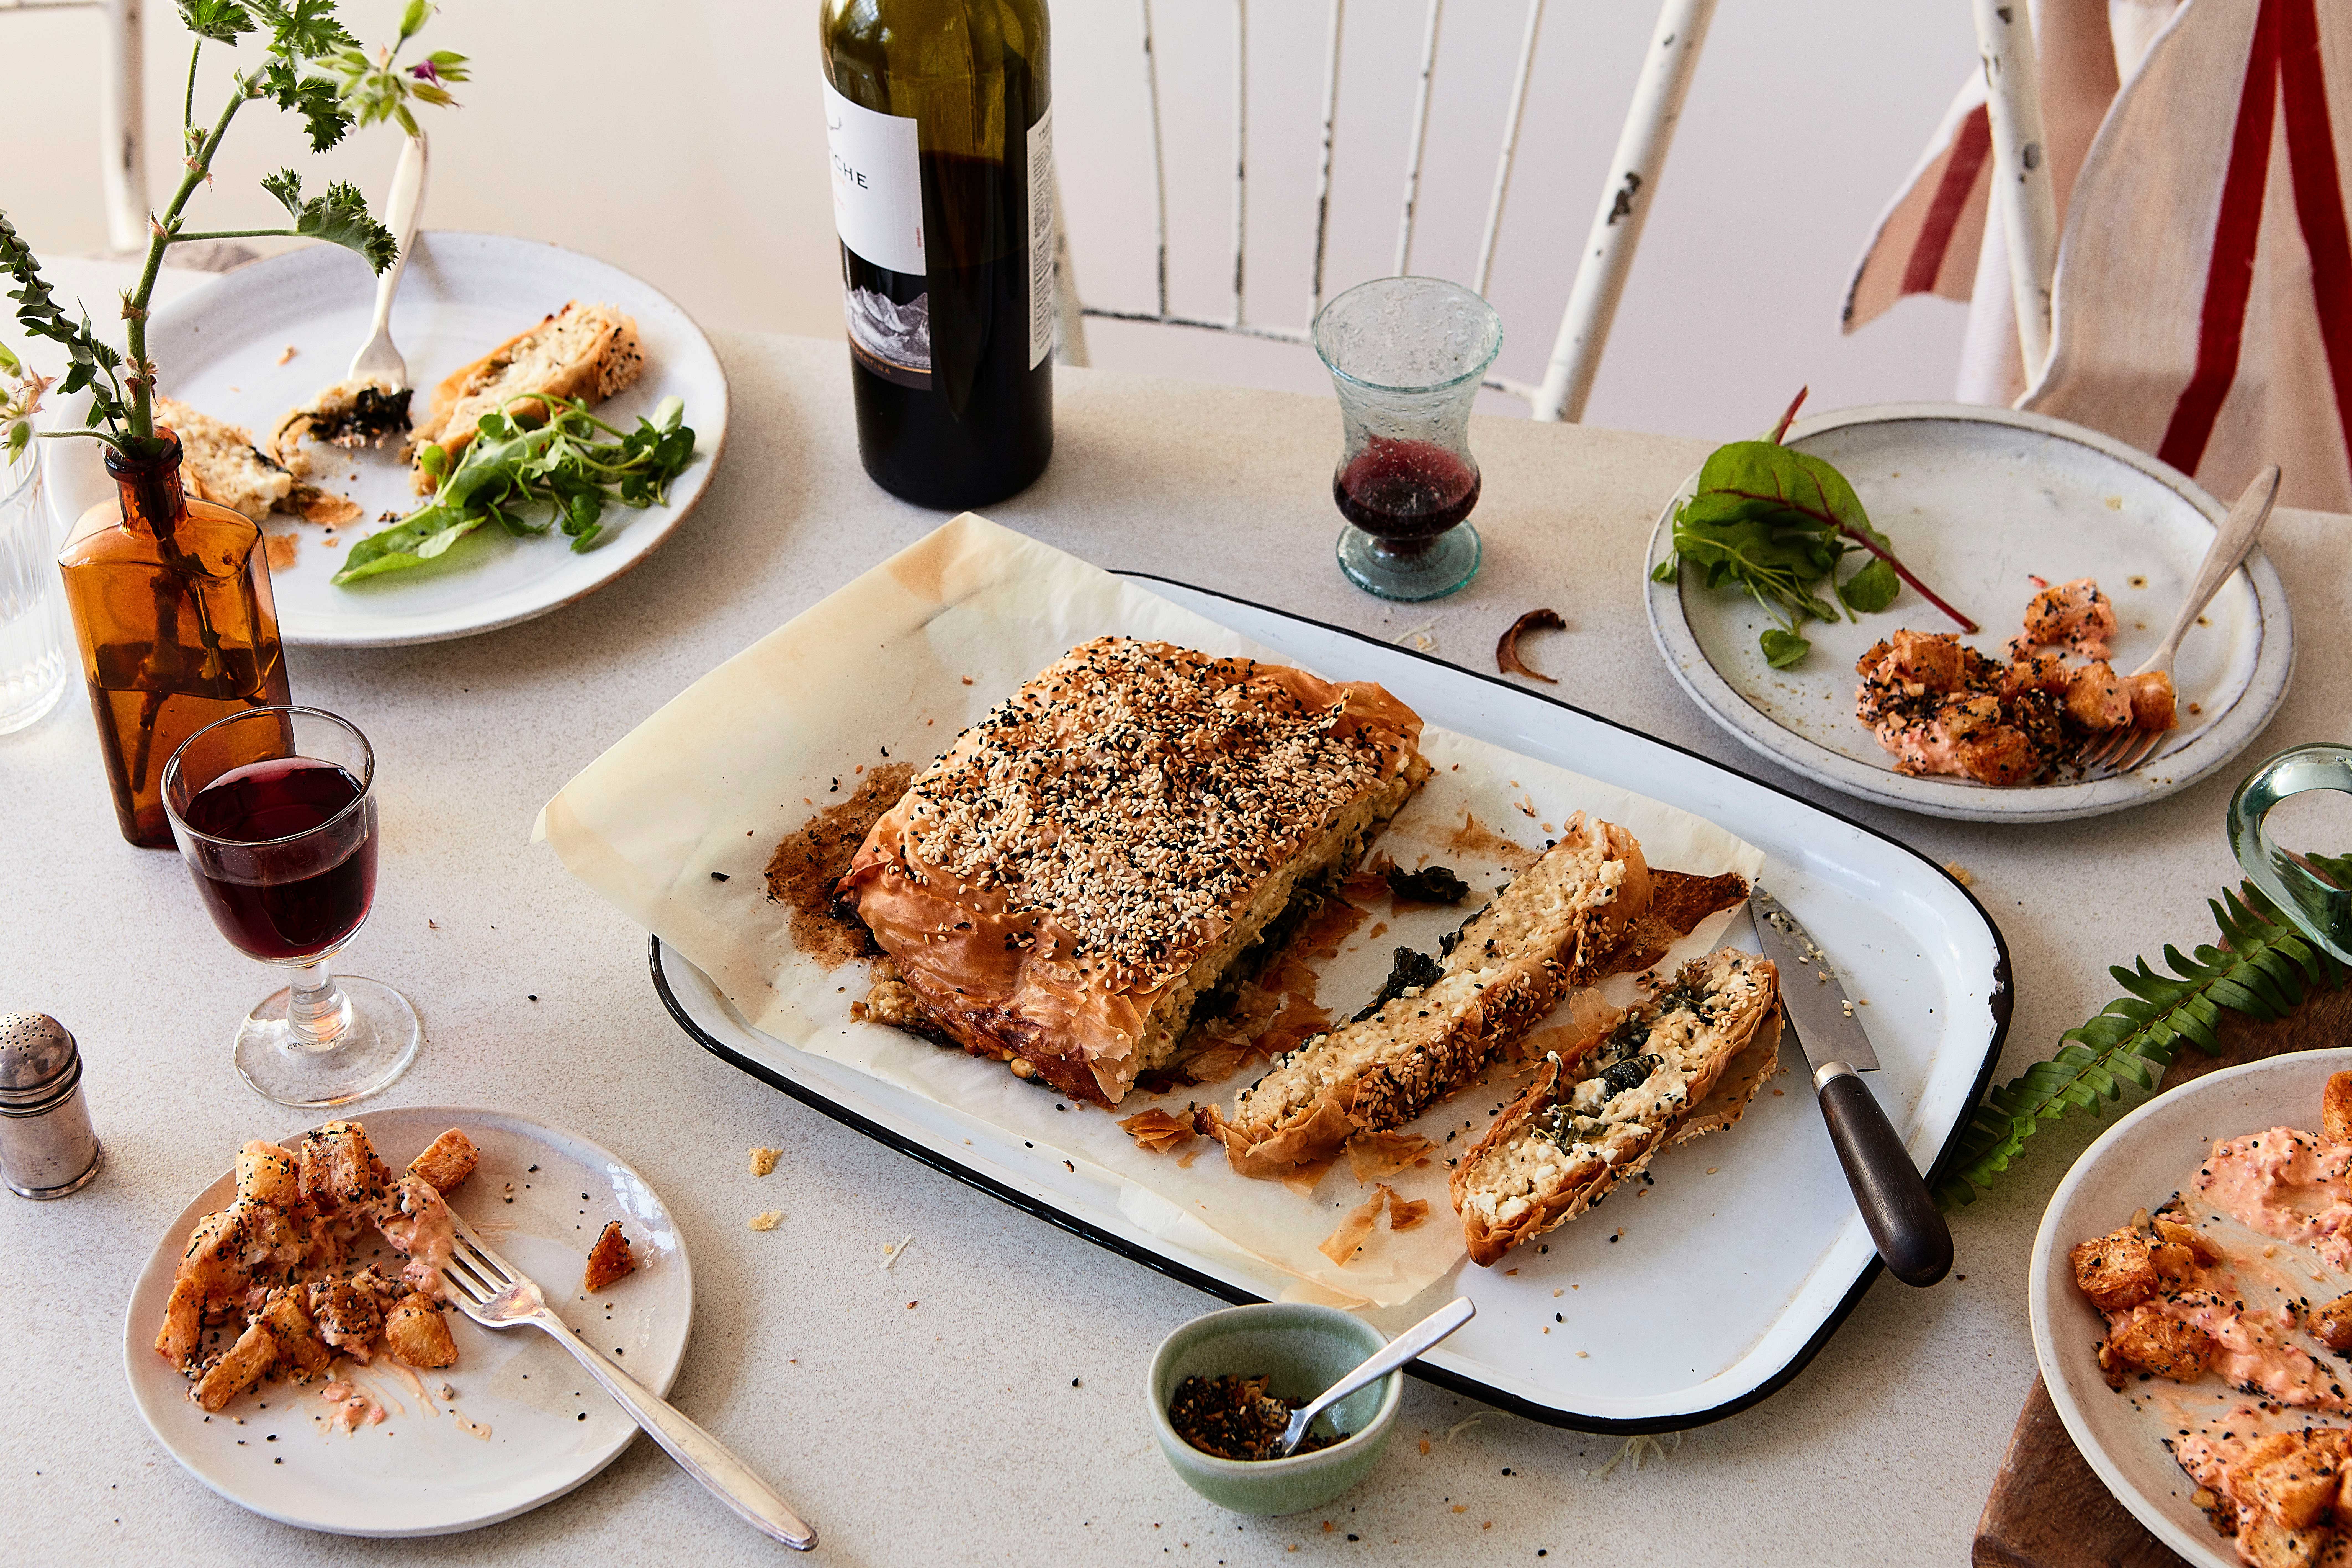 Spinach & Feta Filo Pie Recipe | Vegetarian Dinner Party Main Course Idea